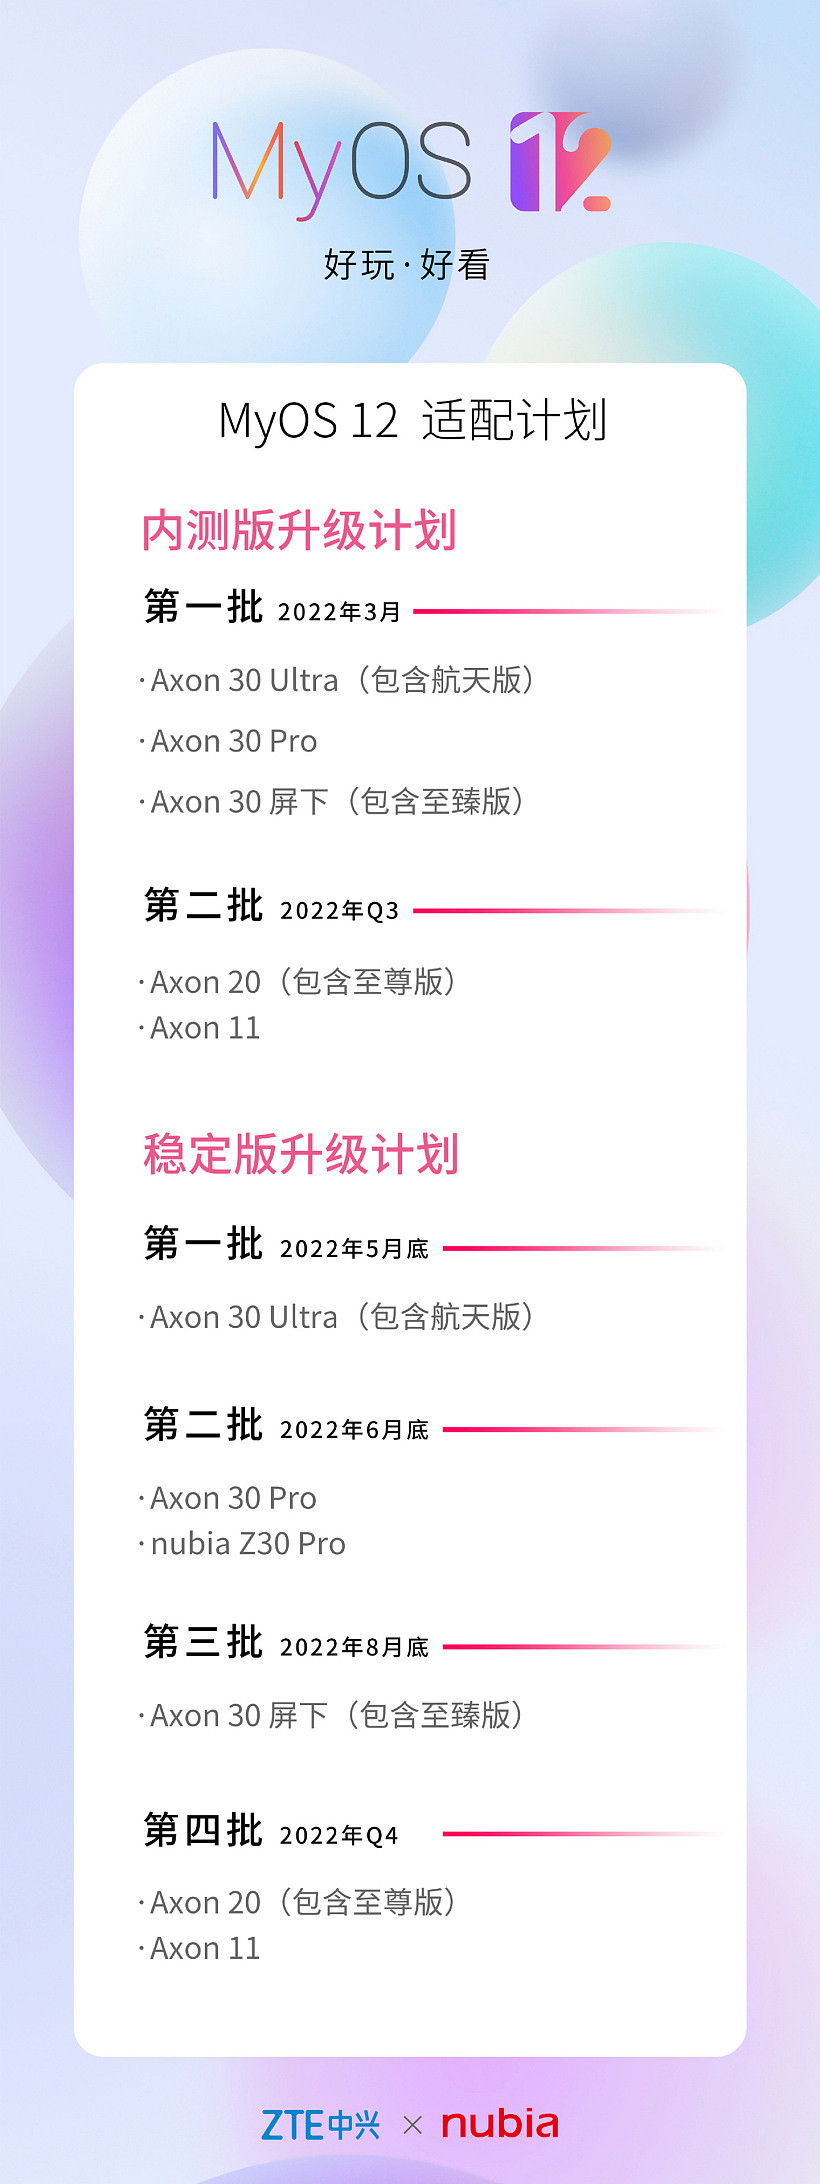 中兴 Axon 30 Ultra 获推 Android 12 + MyOS 12 稳定版 - 3